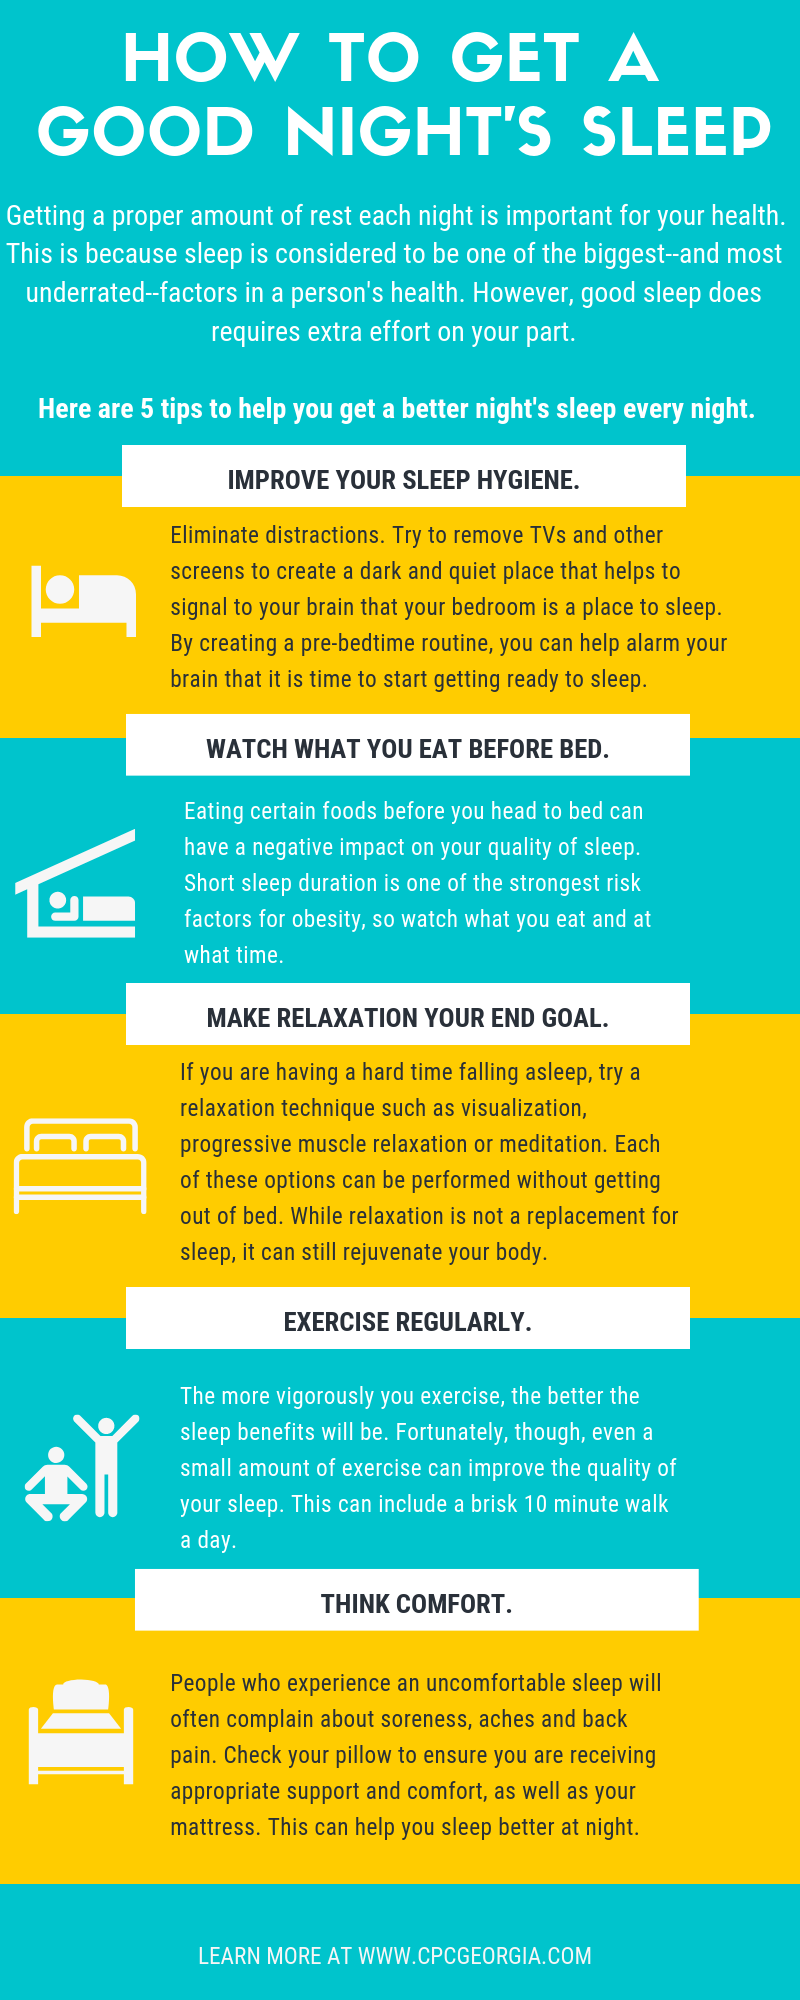 Tips for a Good Night's Sleep